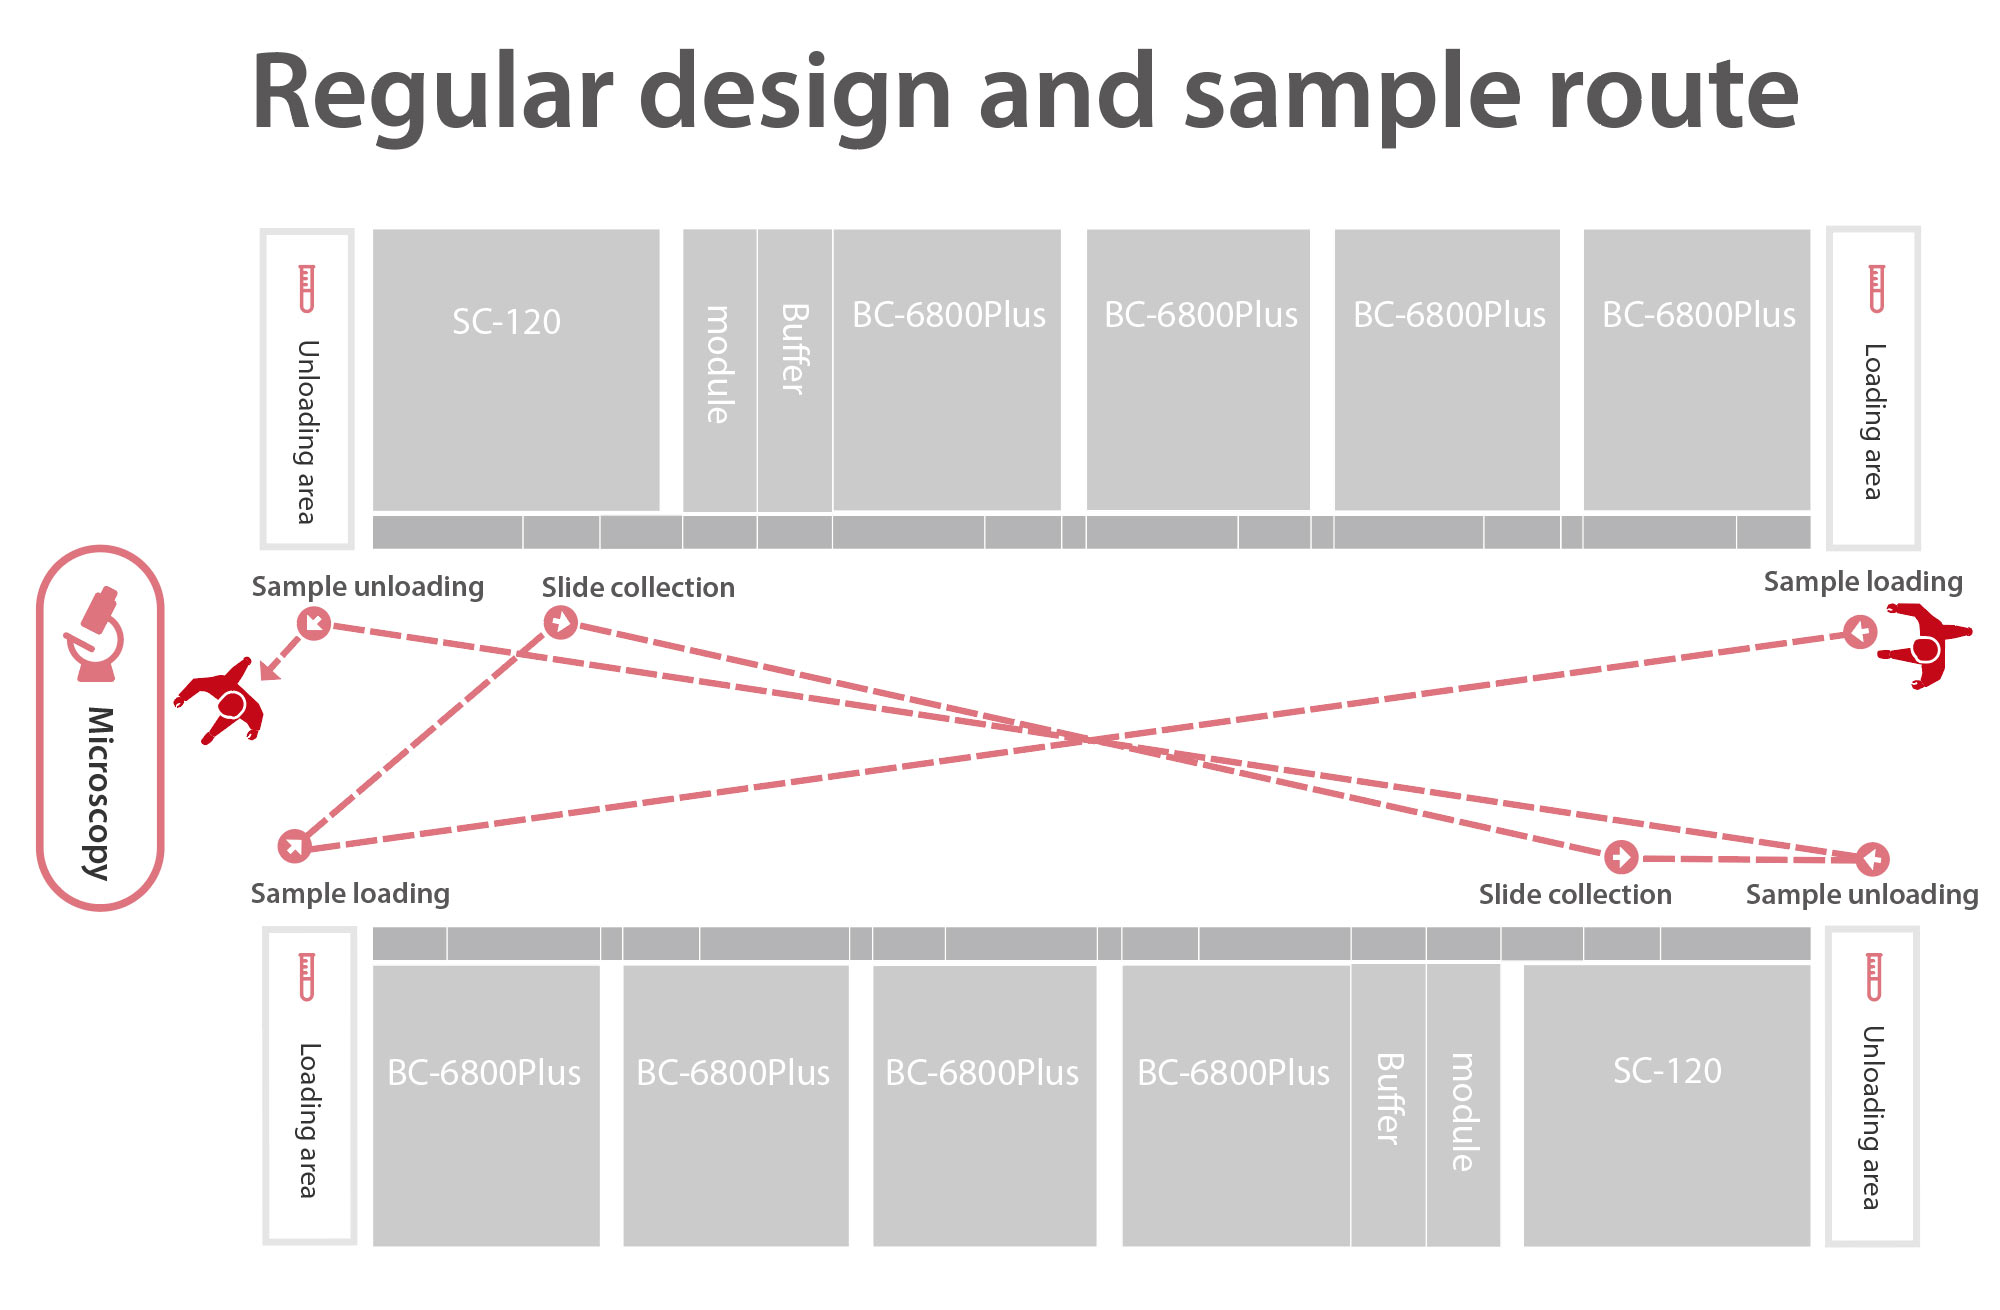 Image: Routes optimisation - Regular design and sample route (Photo courtesy of Mindray)